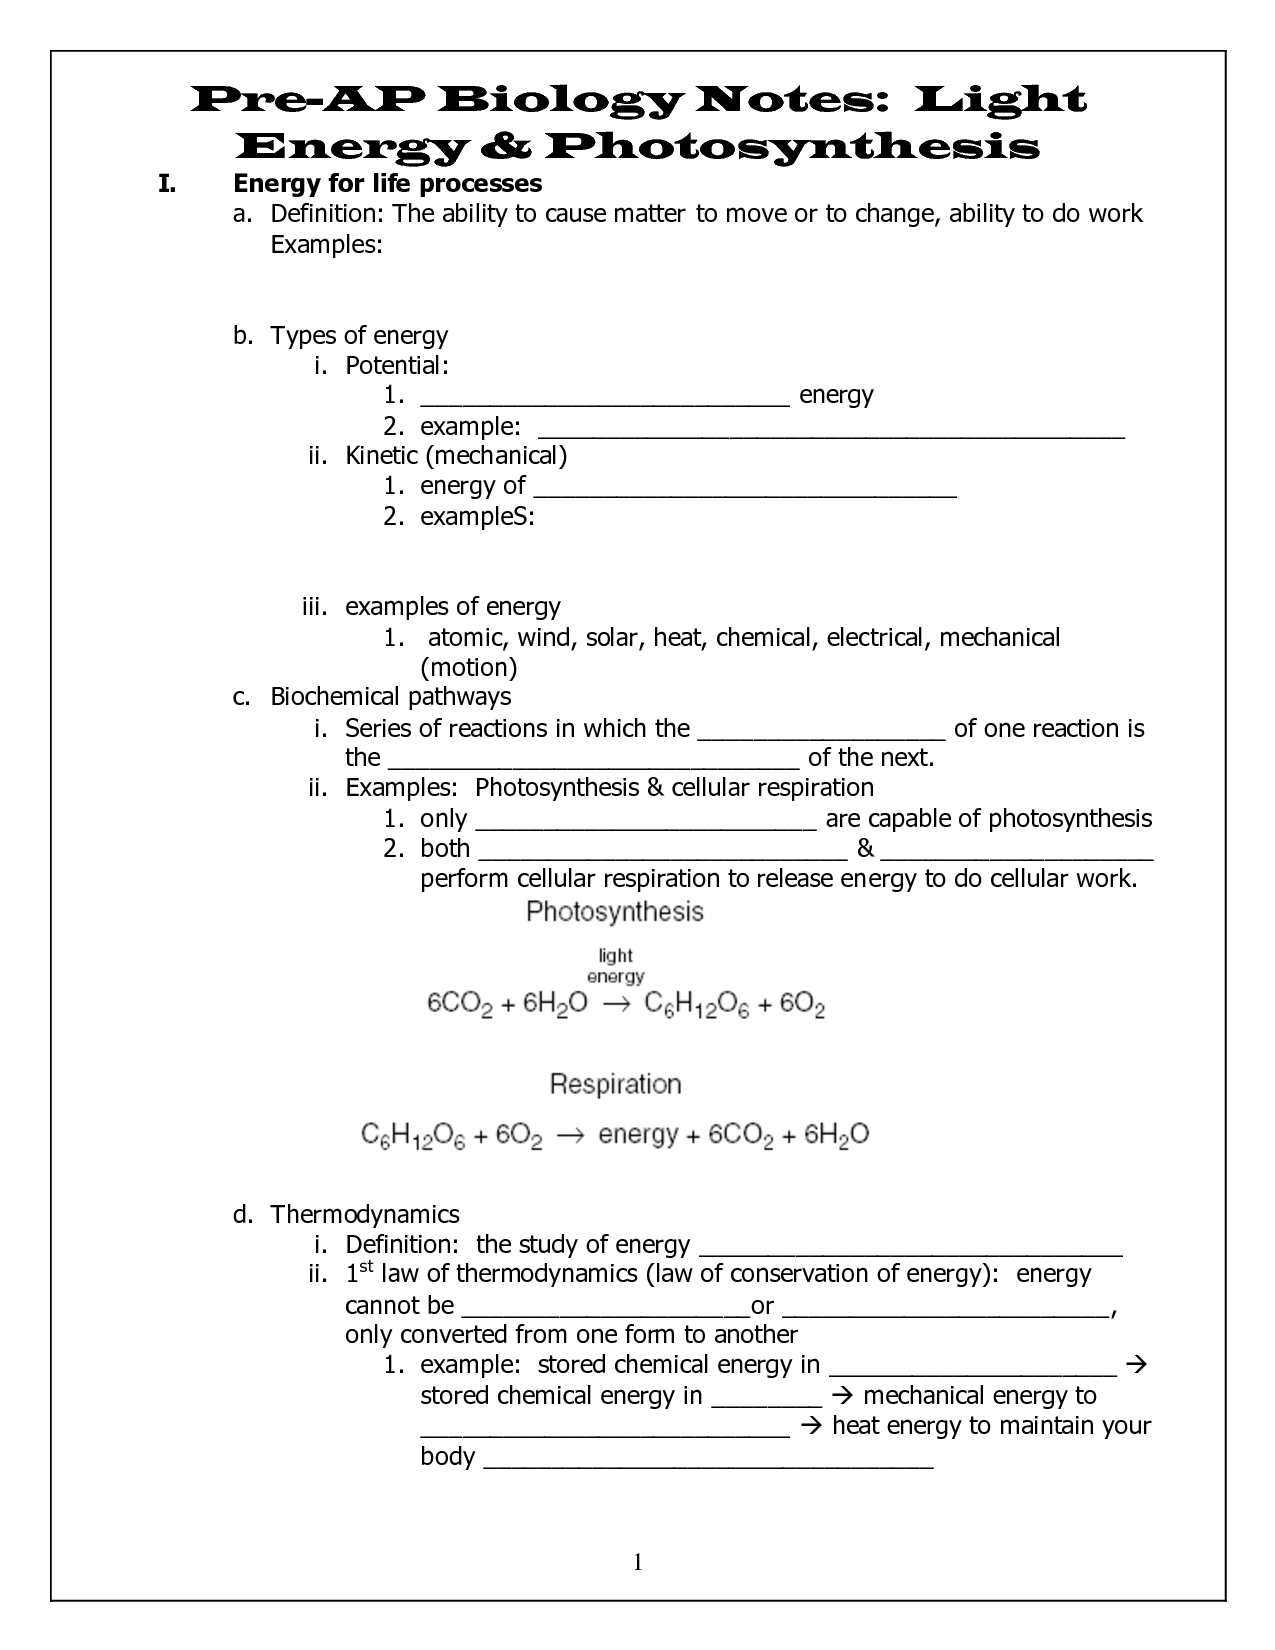 AP Biology Photosynthesis Worksheet Answers Image